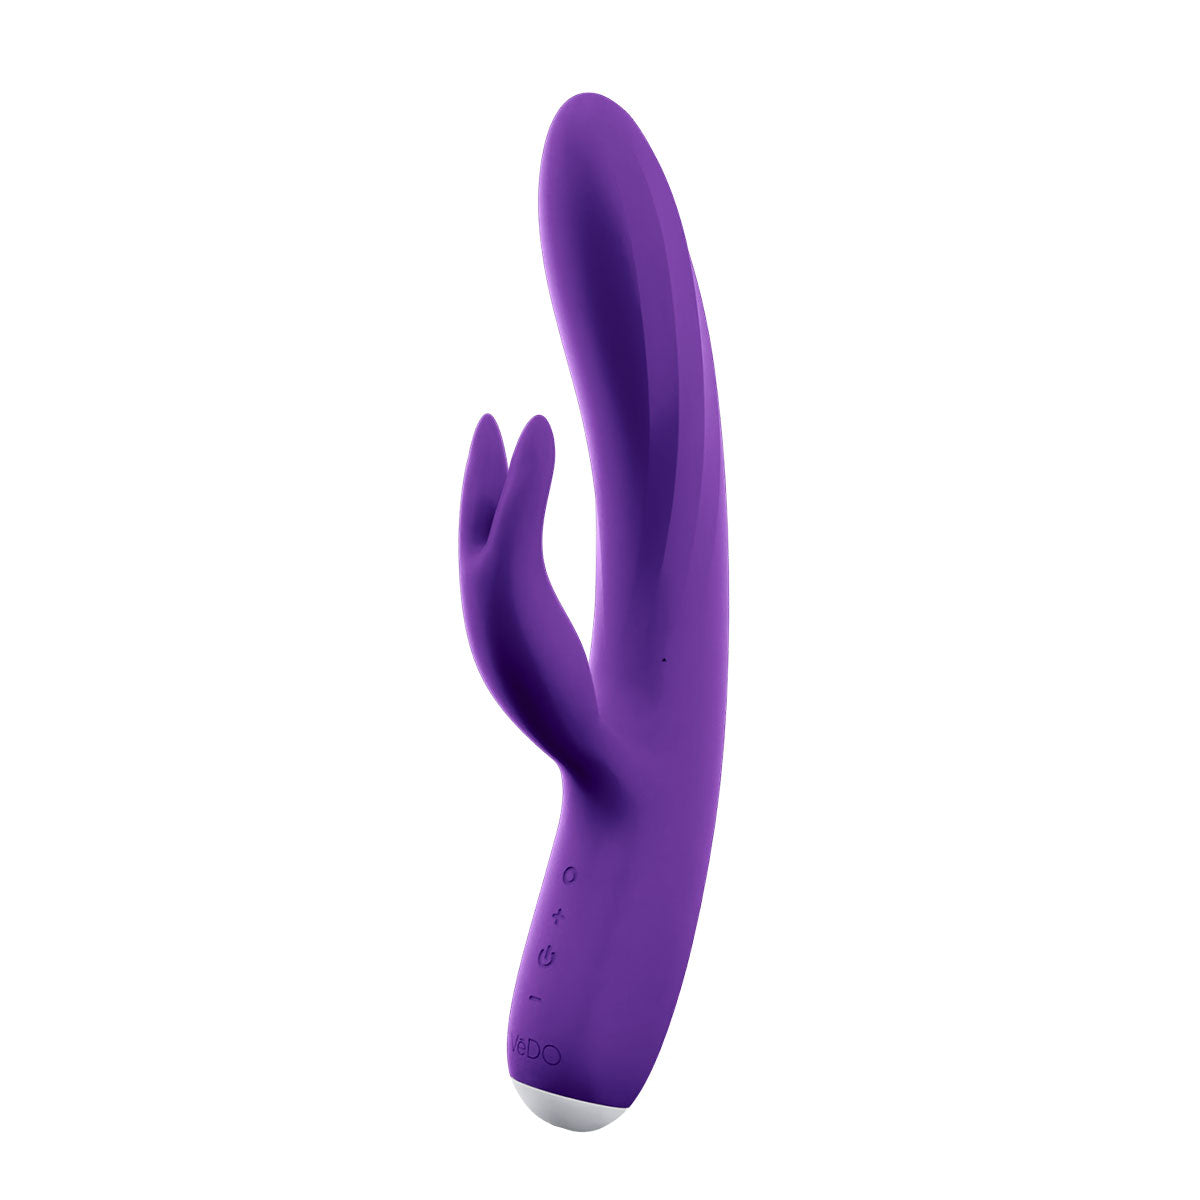 Thumper Bunny: Powerful G-Spot Vibrator by VeDO Purple